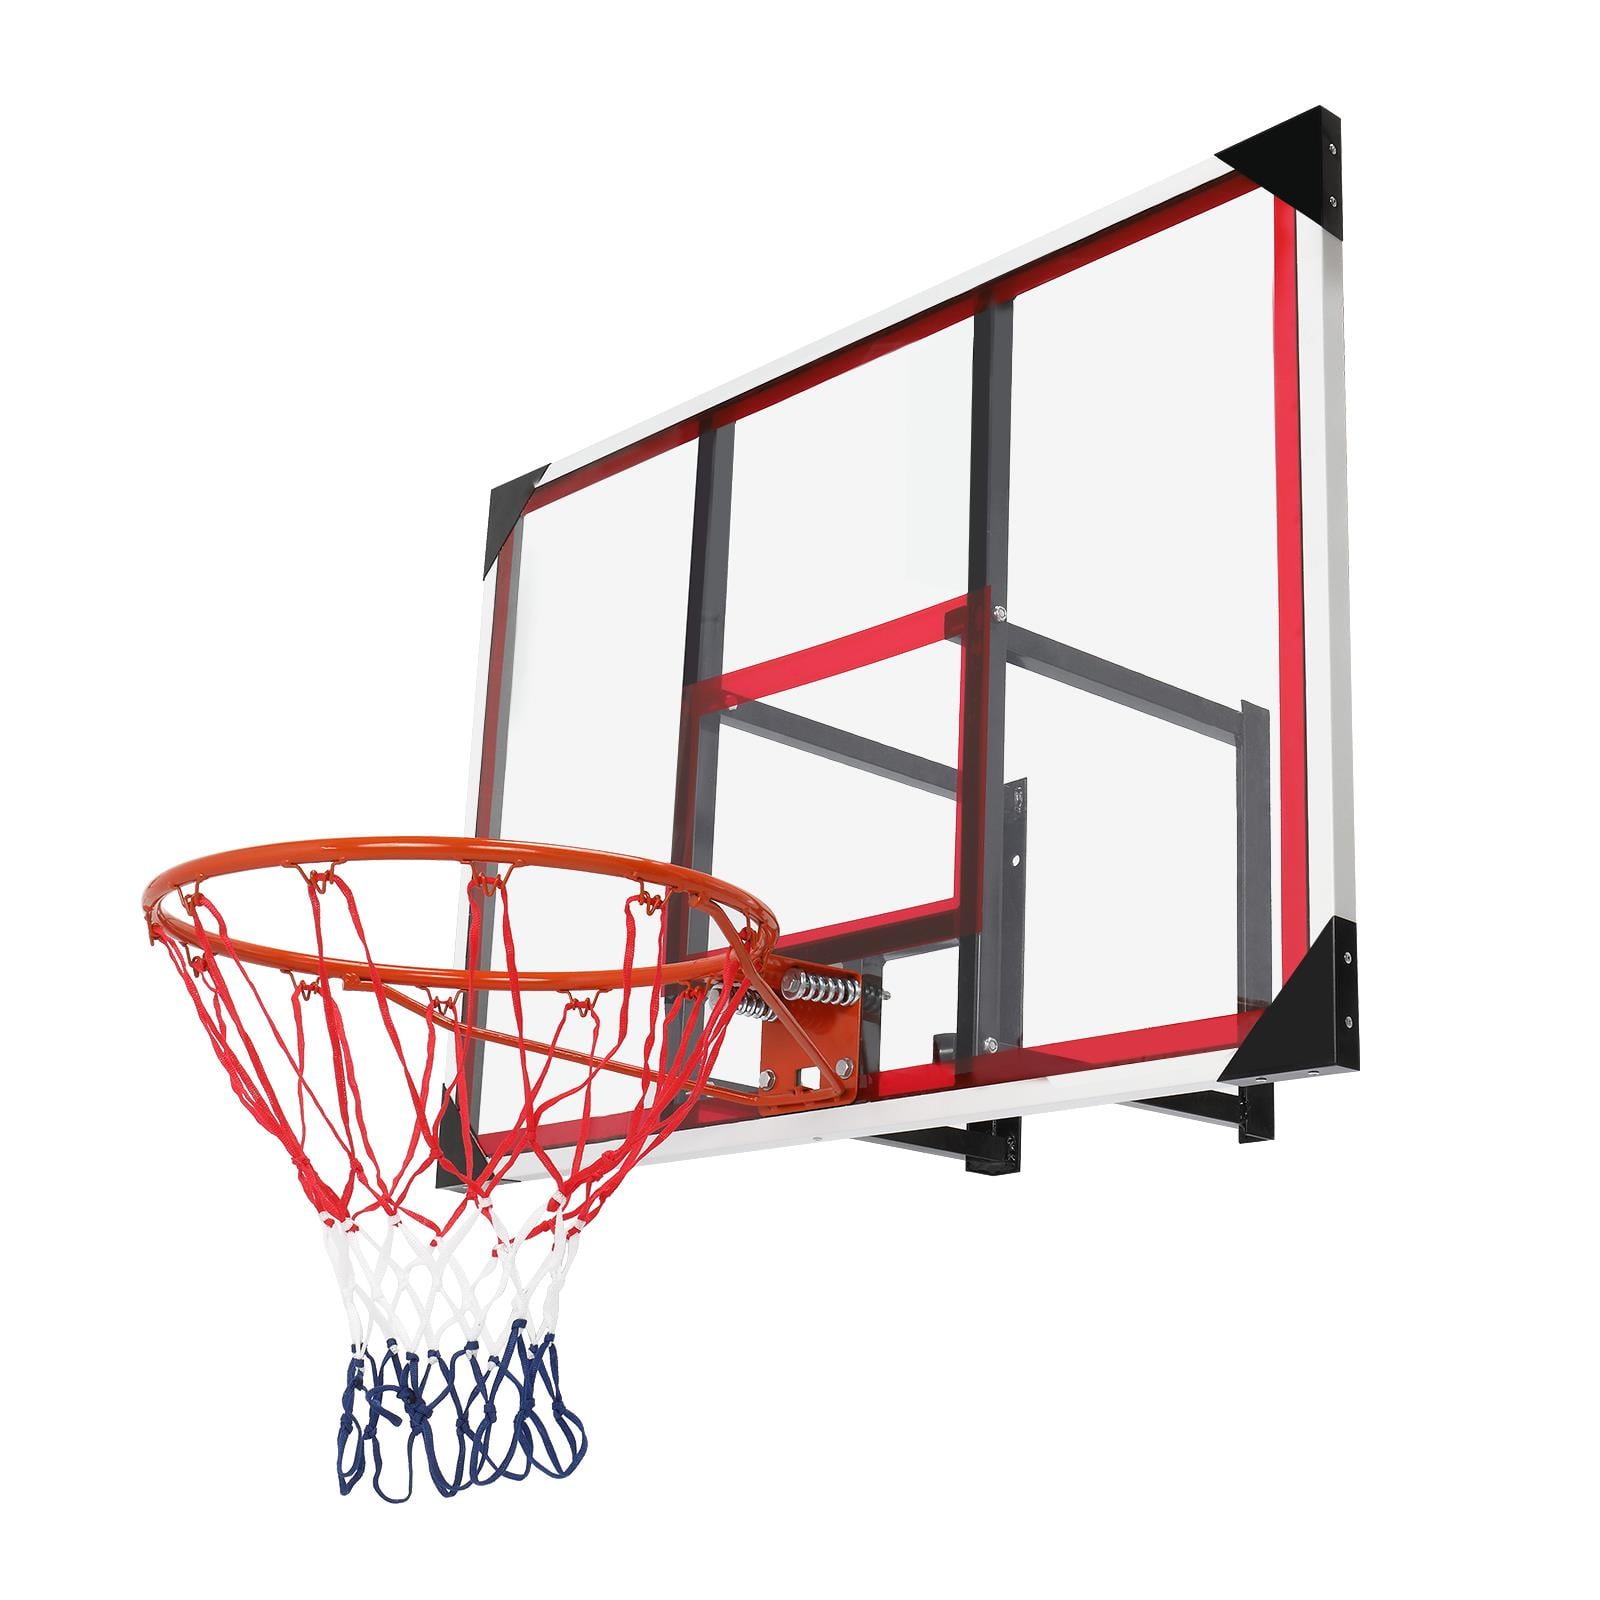 Winado 44'' Basketball Backboard, Wall Mounted Basketball Hoops